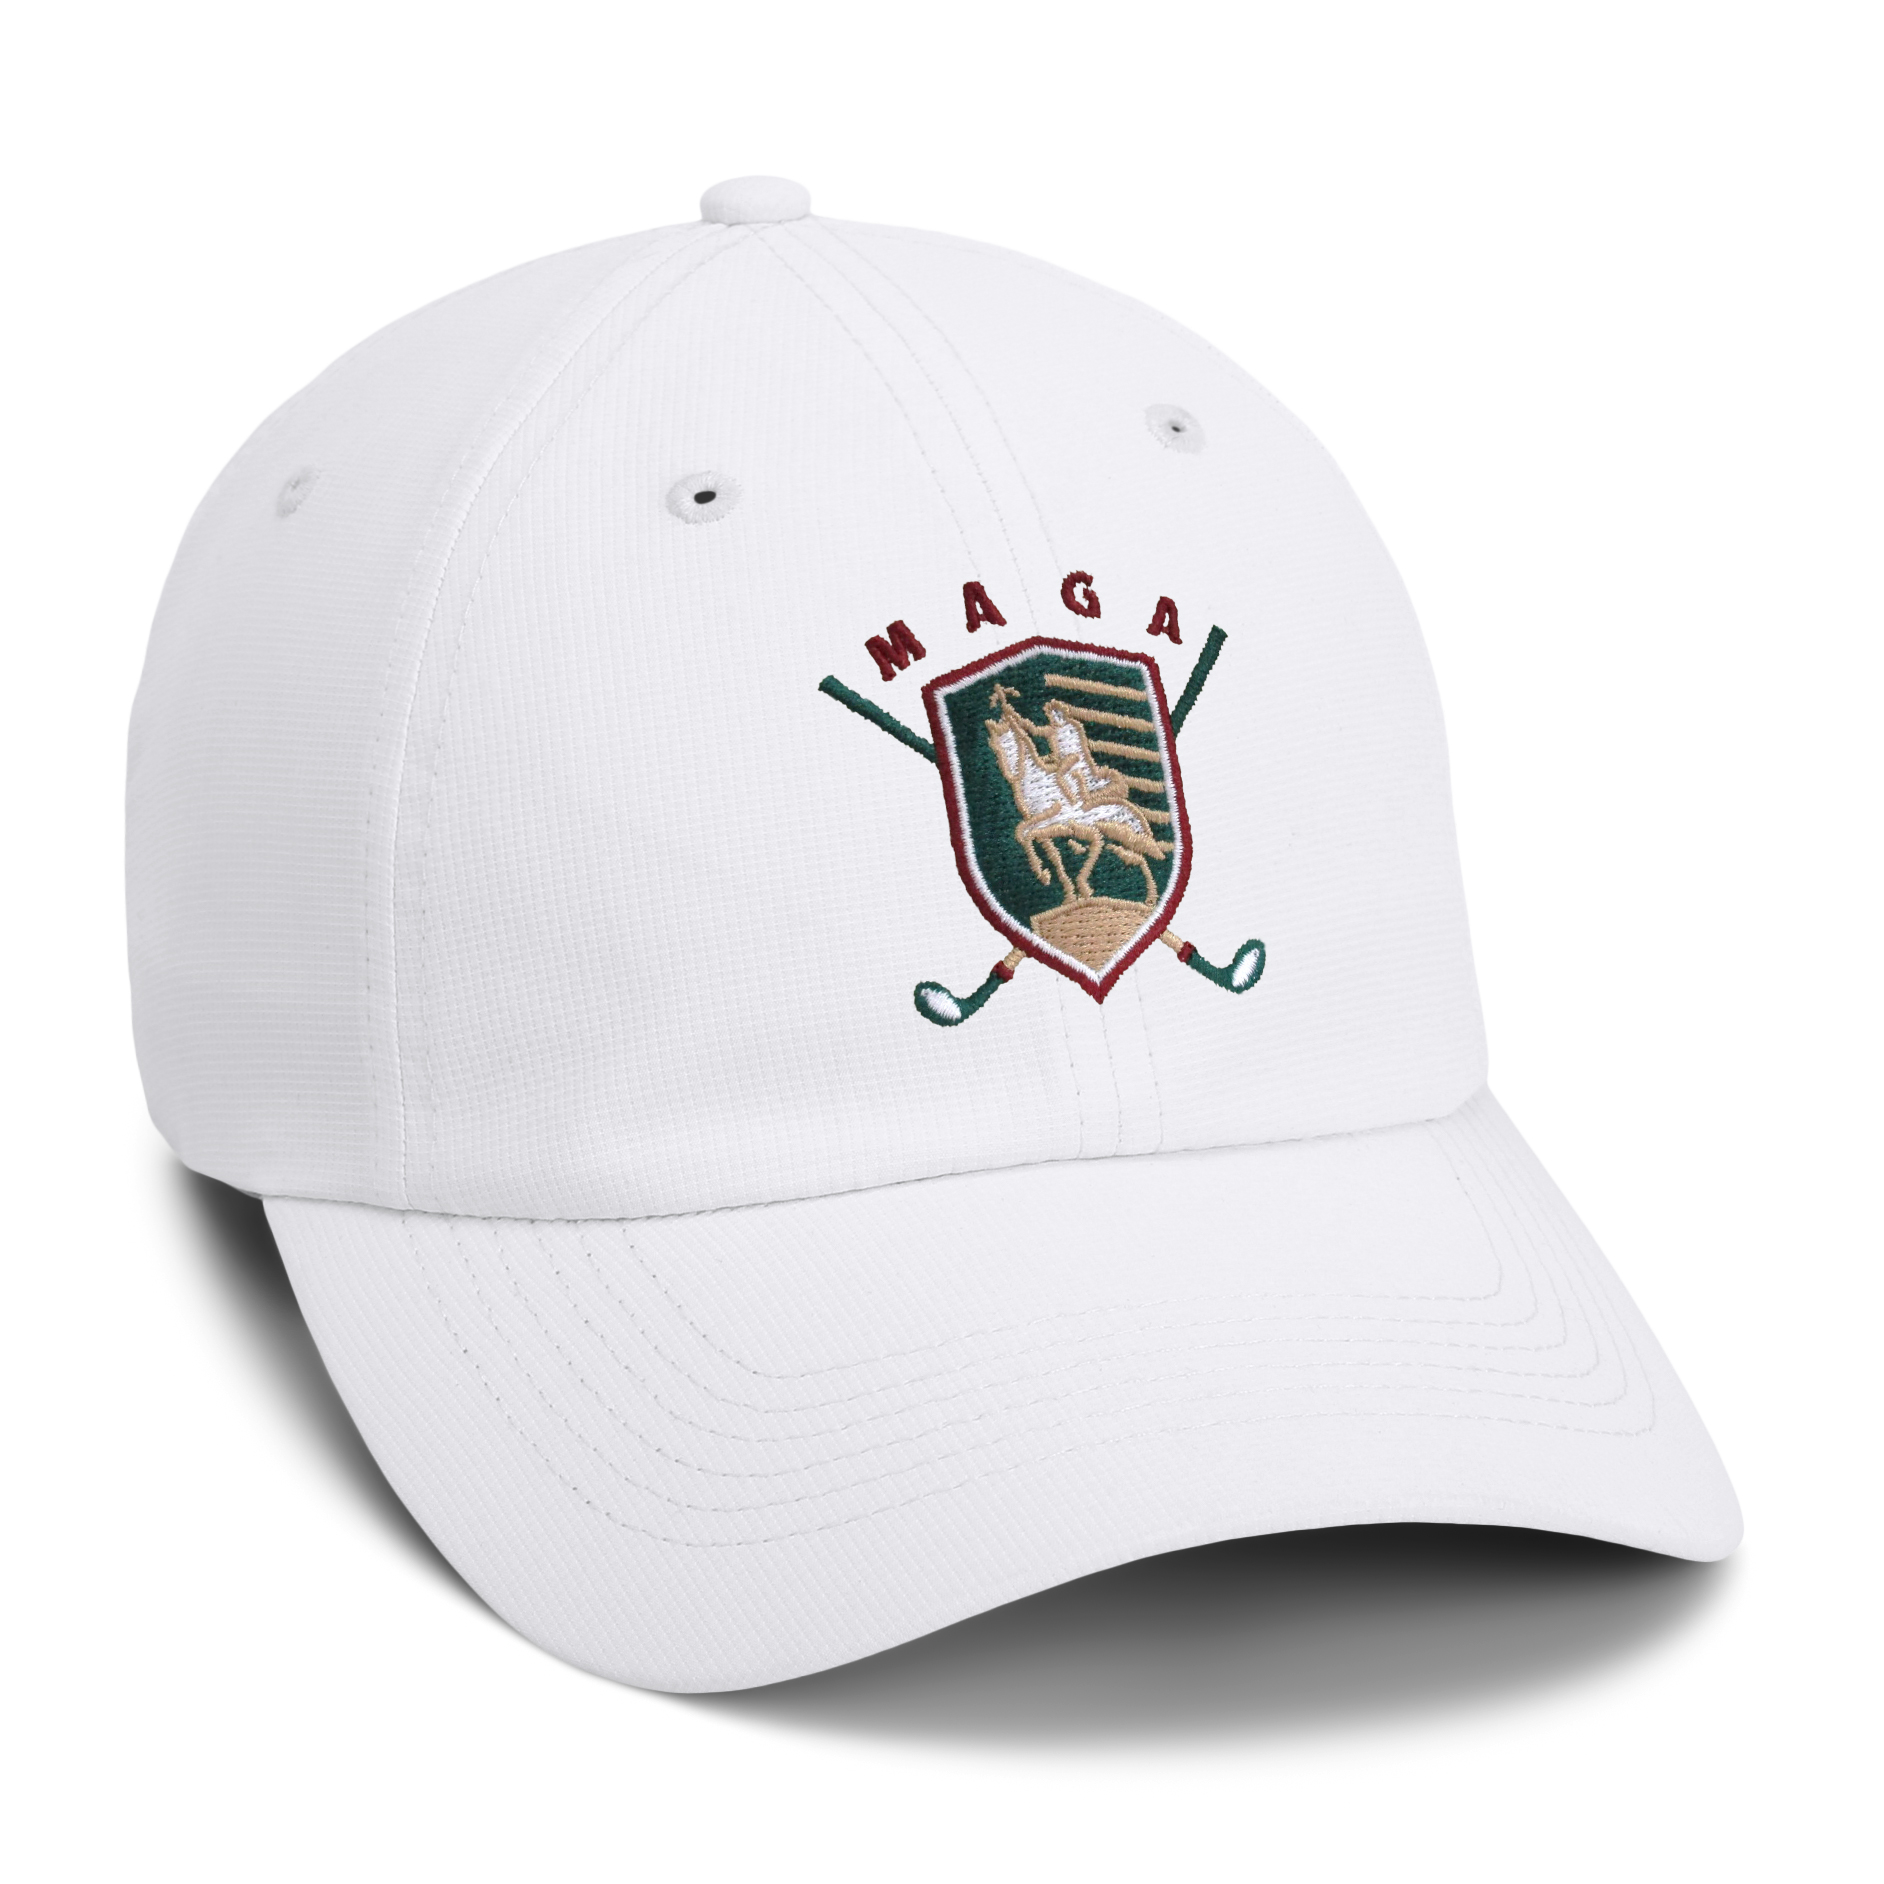 St. Louis Cardinals Imperial Golf Hat